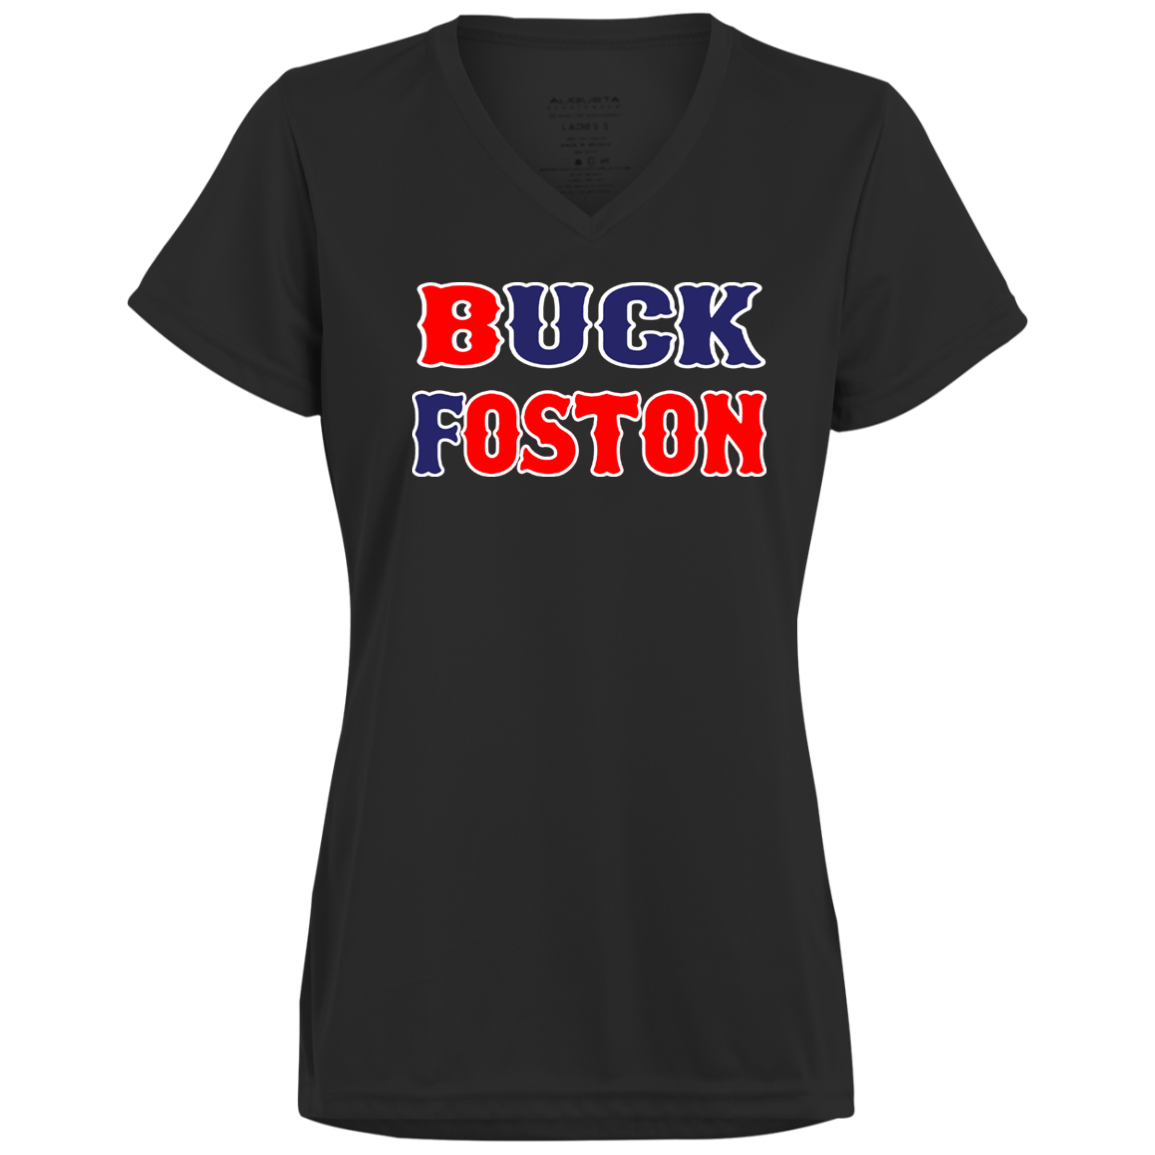 ArtichokeUSA Custom Design. BUCK FOSTON. Ladies’ Moisture-Wicking V-Neck Tee